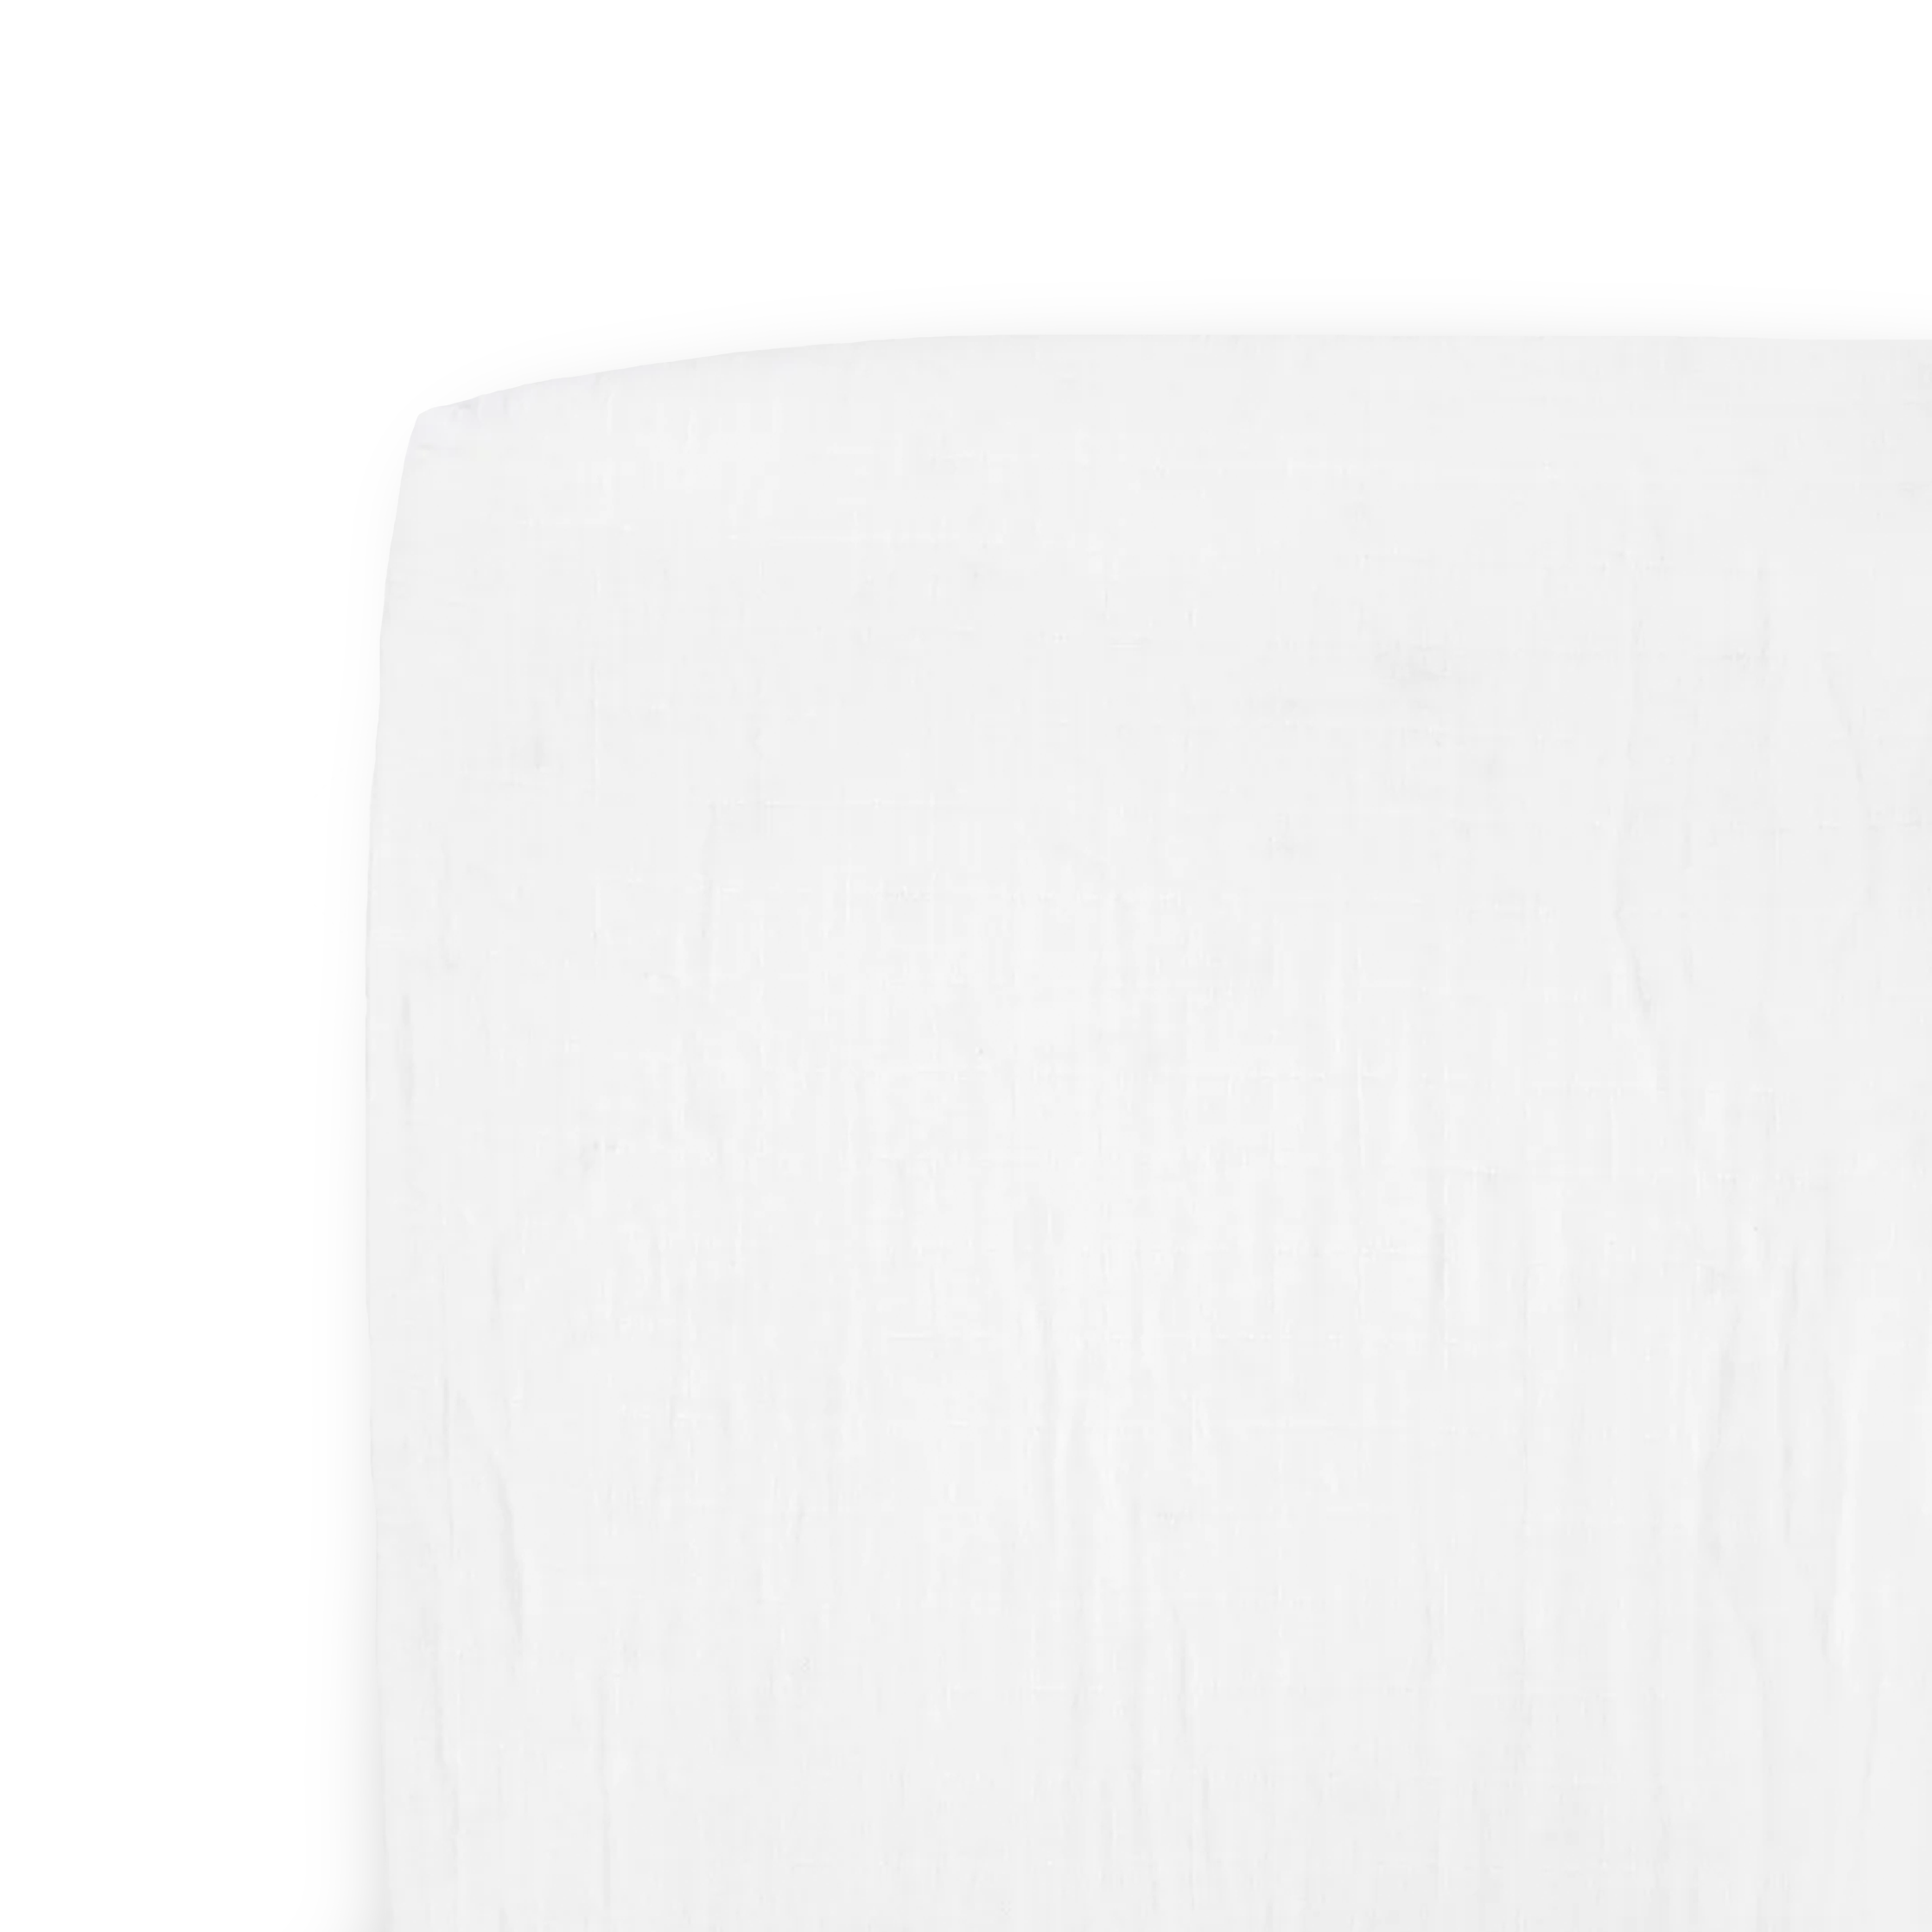 Organic Cotton Muslin Crib Sheet - White